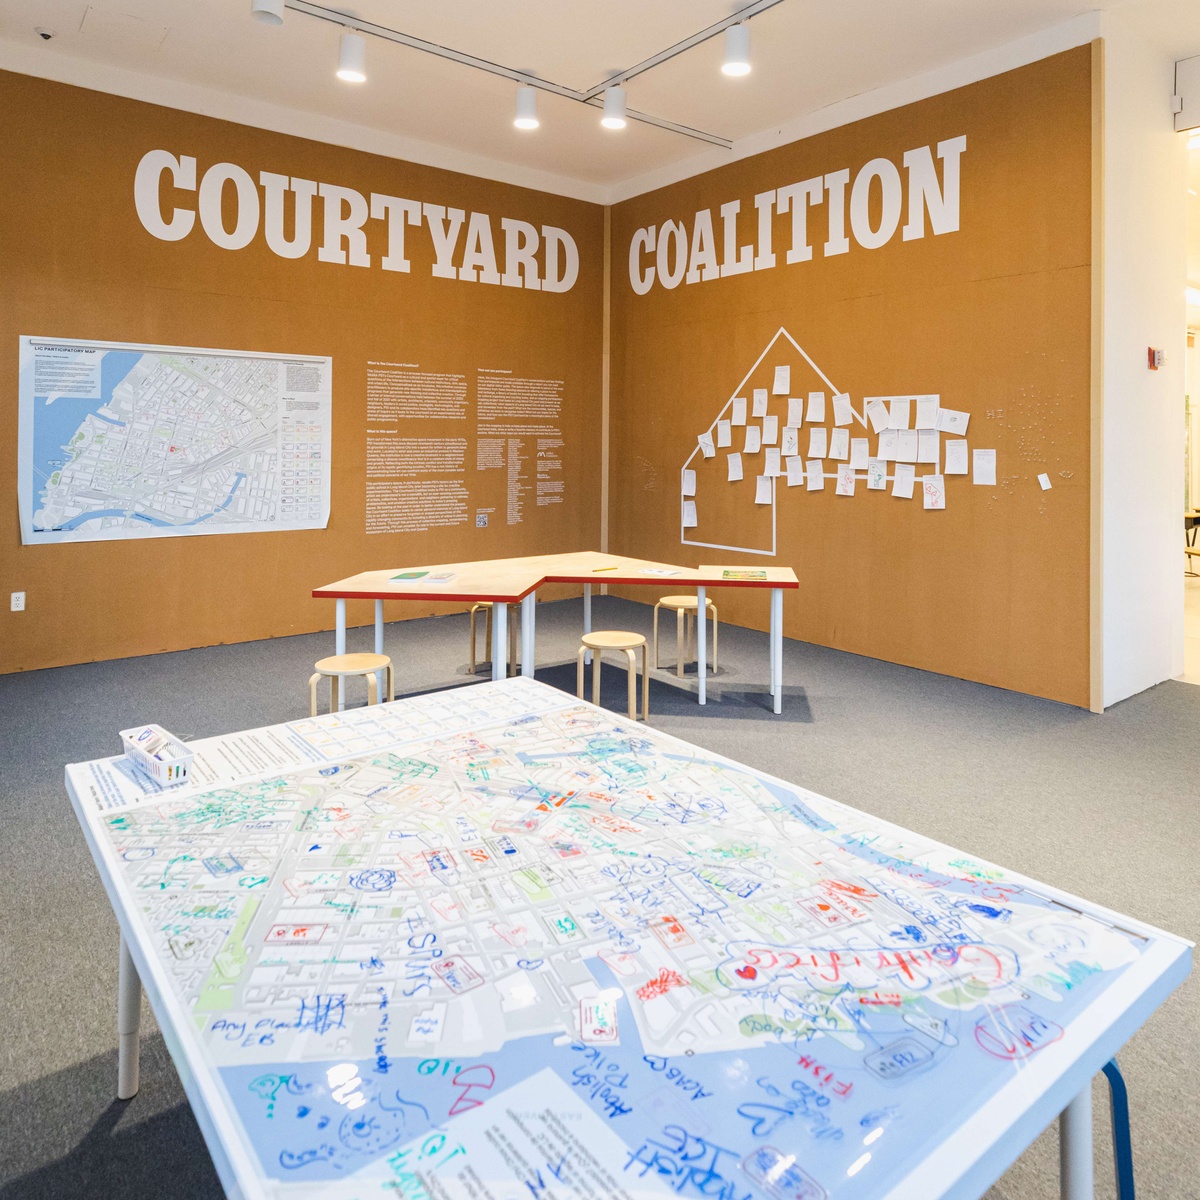 Courtyard Coalition